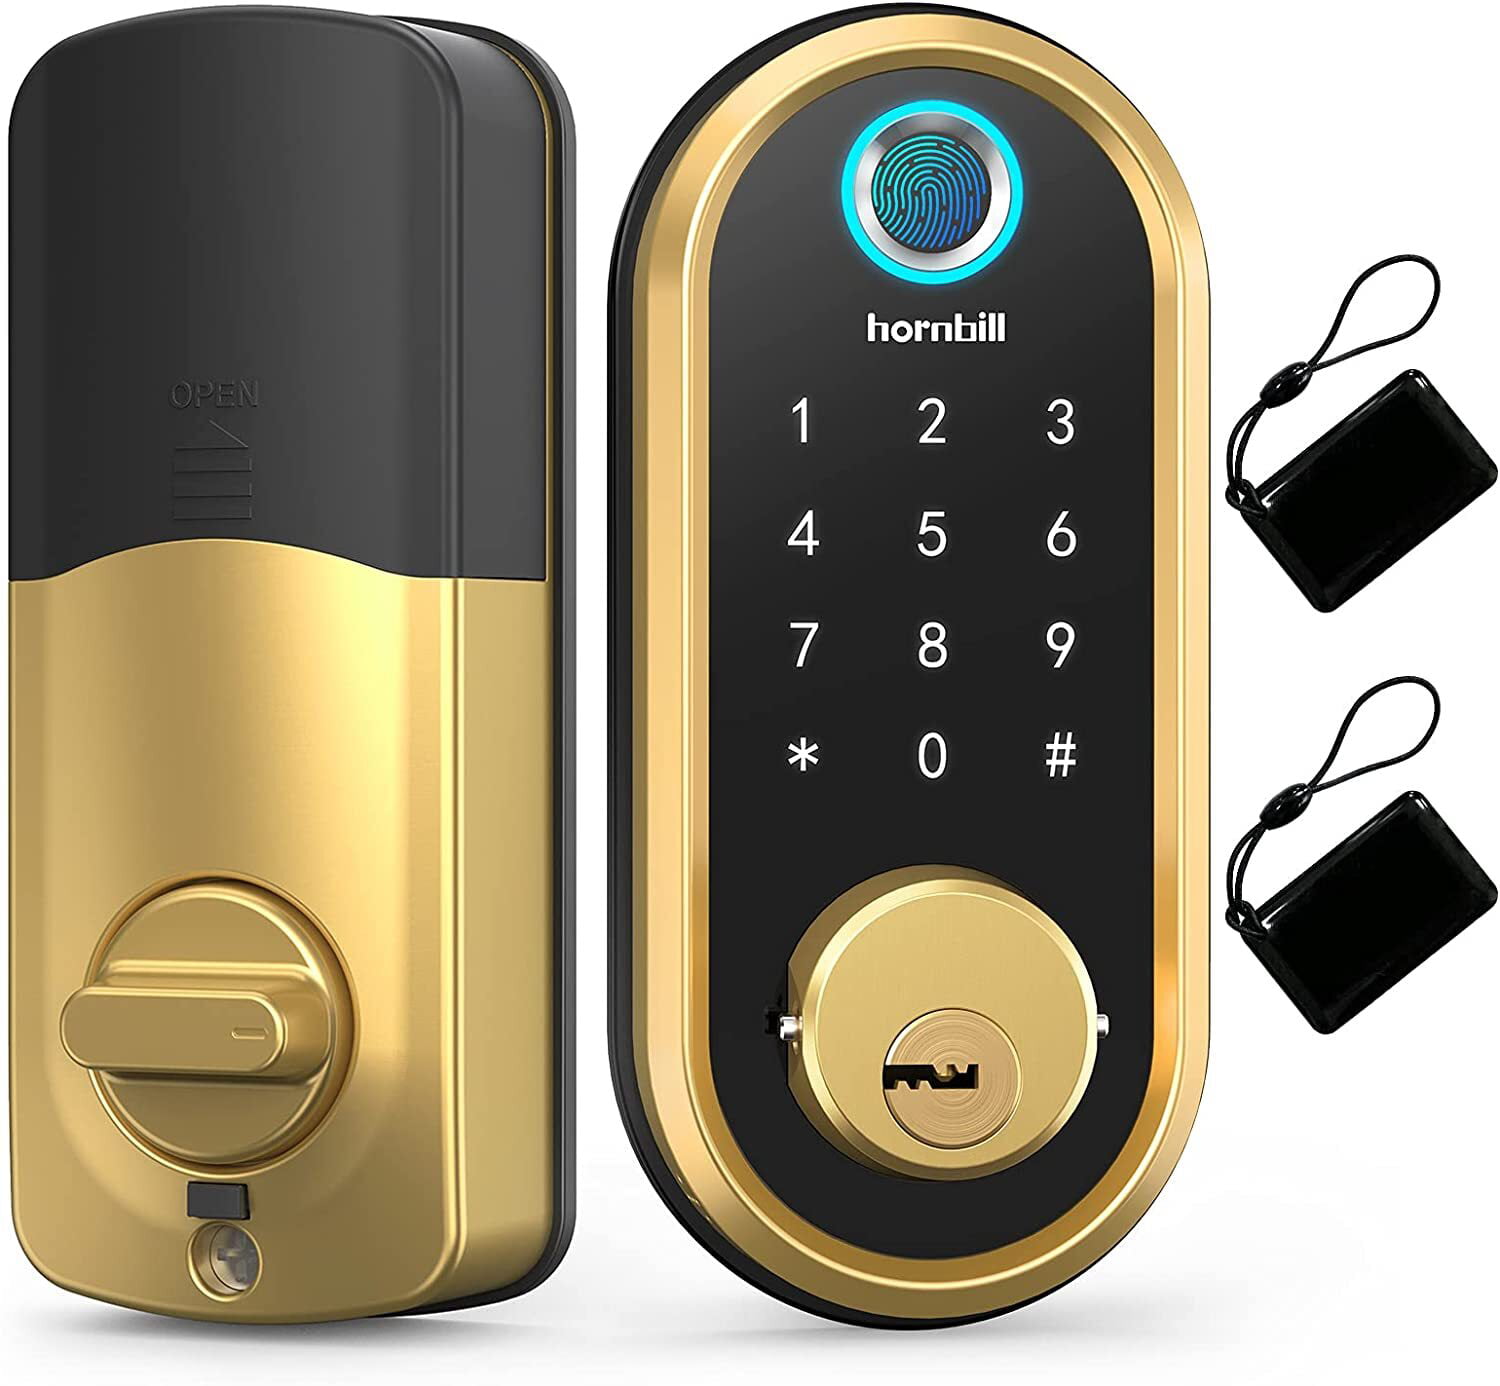 IP65 Weatherproofing Smart Lock Touch,Keyless Entry Door Locks,hornbill Bluetooth Electronic Deadbolt,Fingerprint Scanner APP Control Touch Screen Keypad,Remote Share Auto Lock,IC Card 